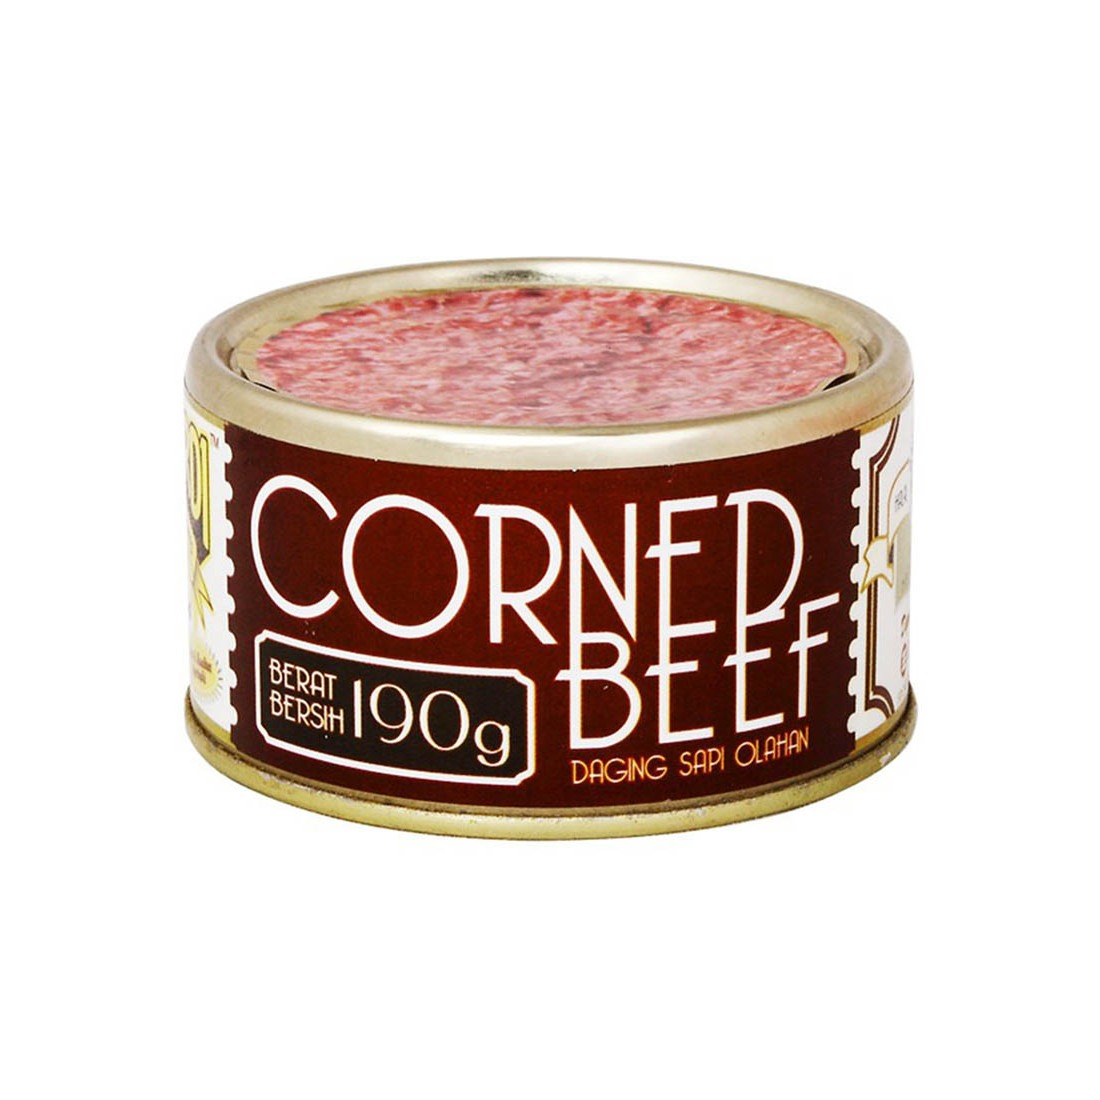 Bernardi 190g Corned Beef